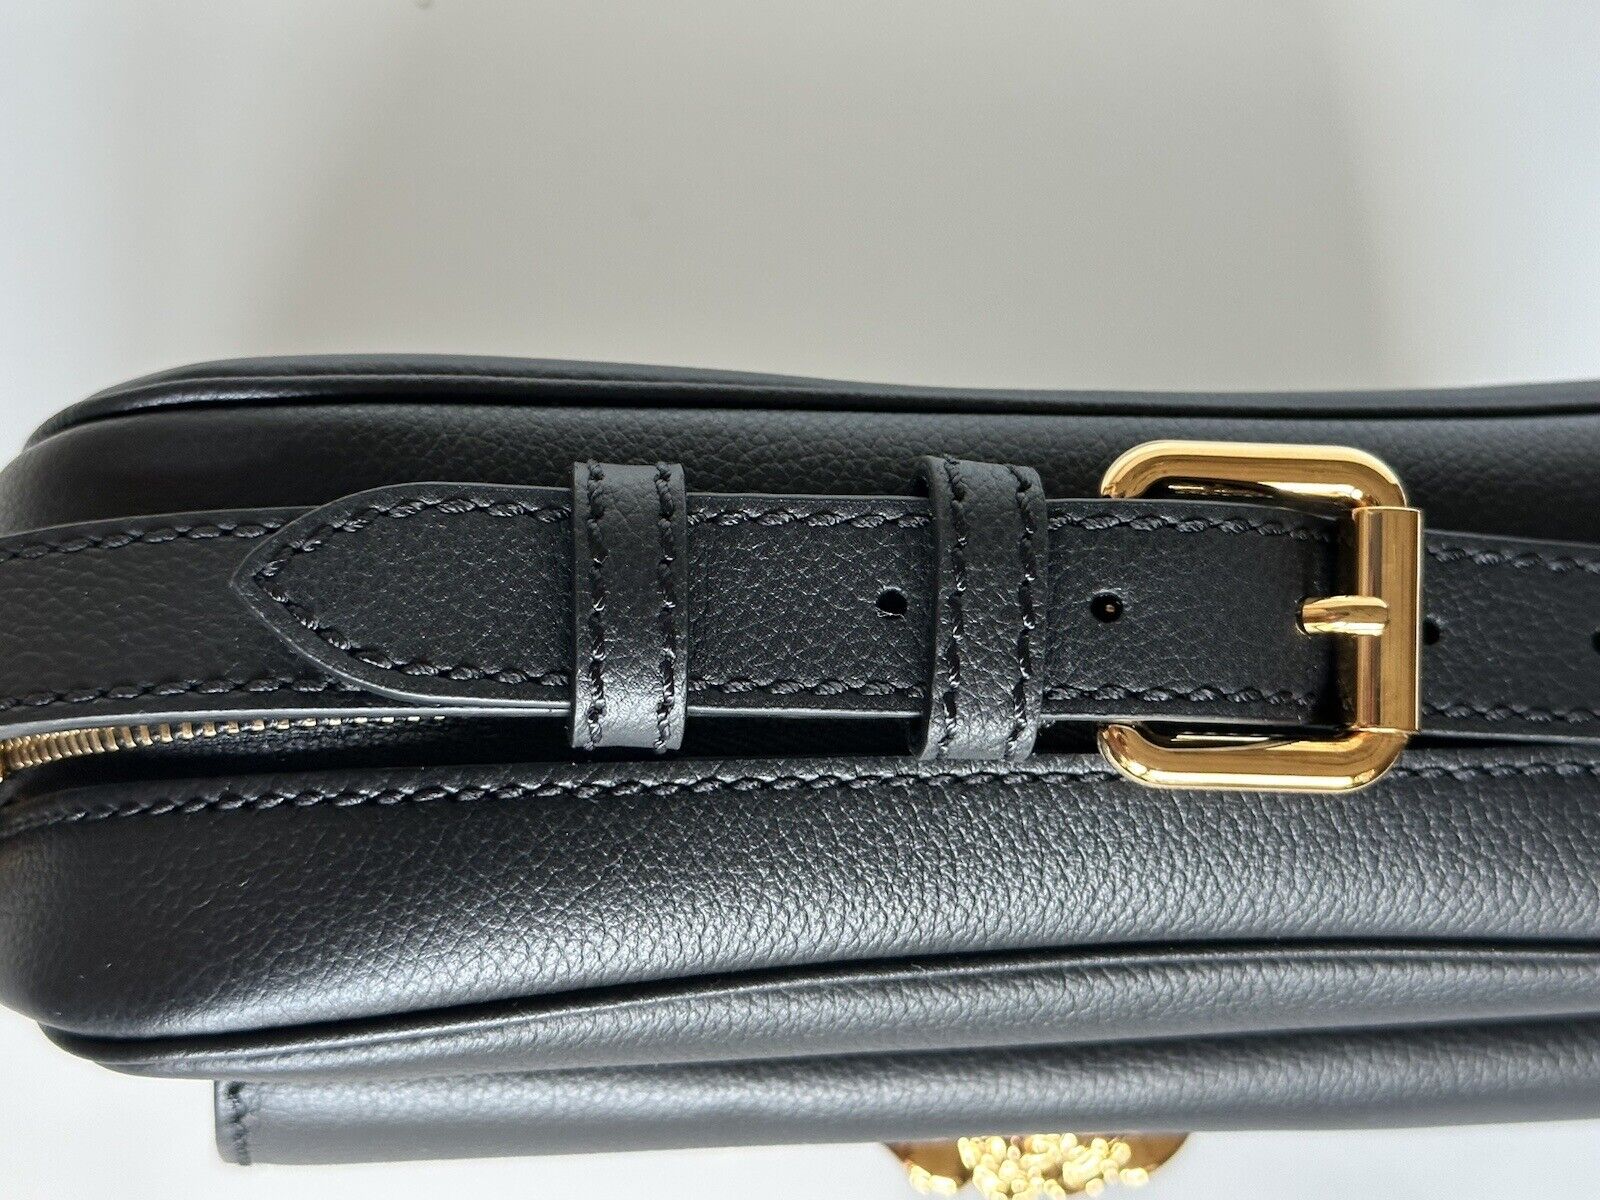 NWT $1400 Versace Medusa Head Calf Leather Black Medium Shoulder Bag 1008102 IT